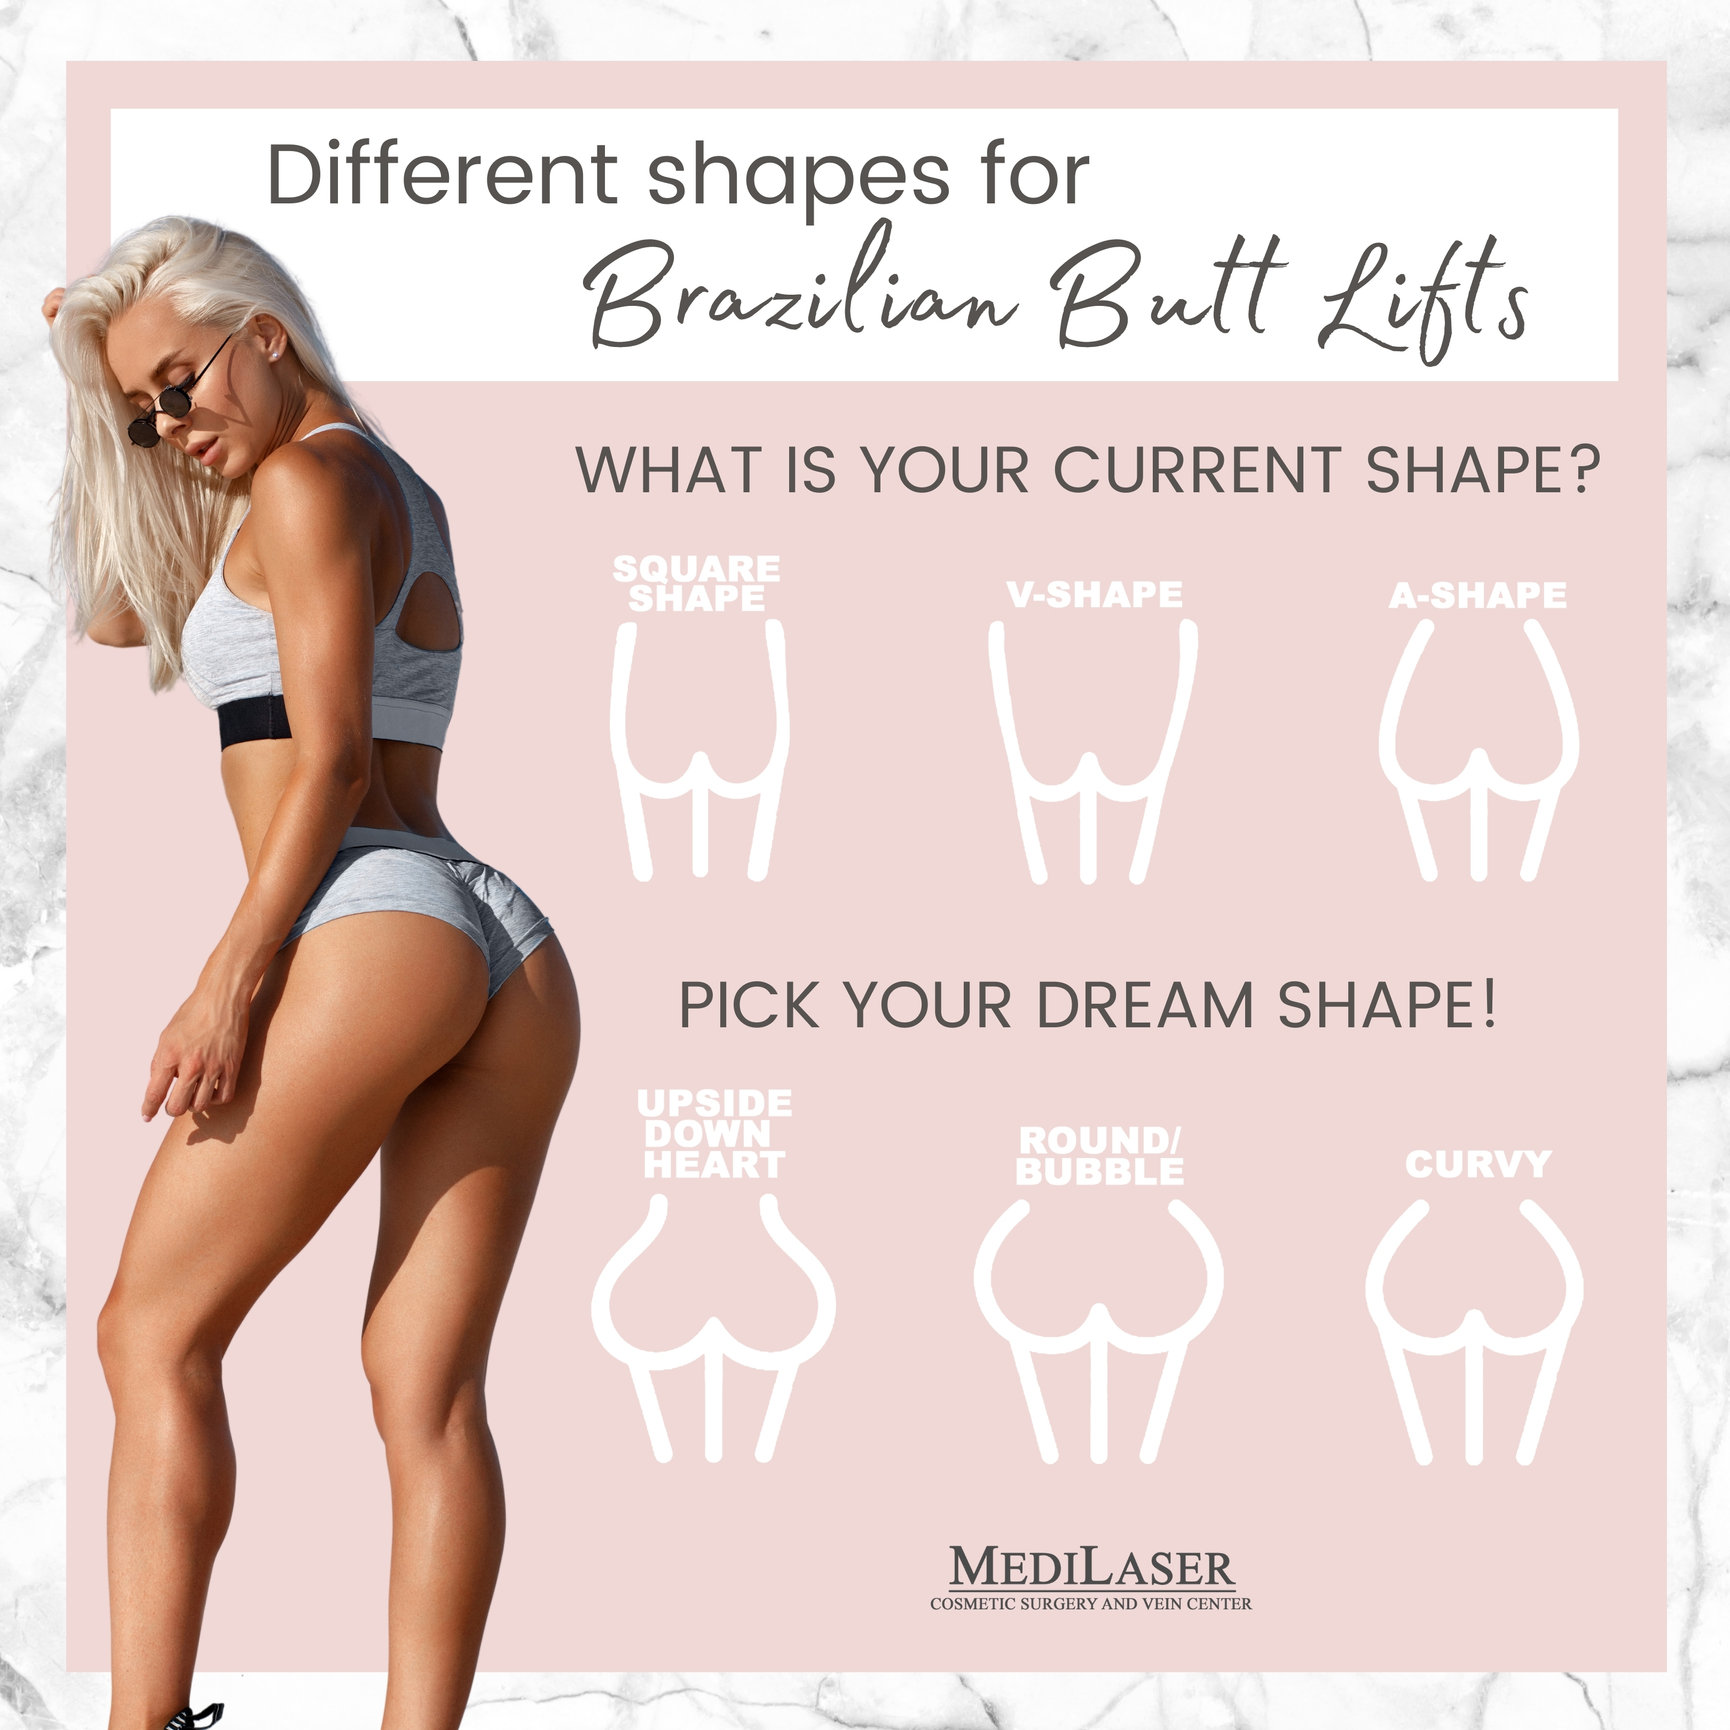 Different Brazilian Butt Lift Shapes - Medilaser Surgery and Vein